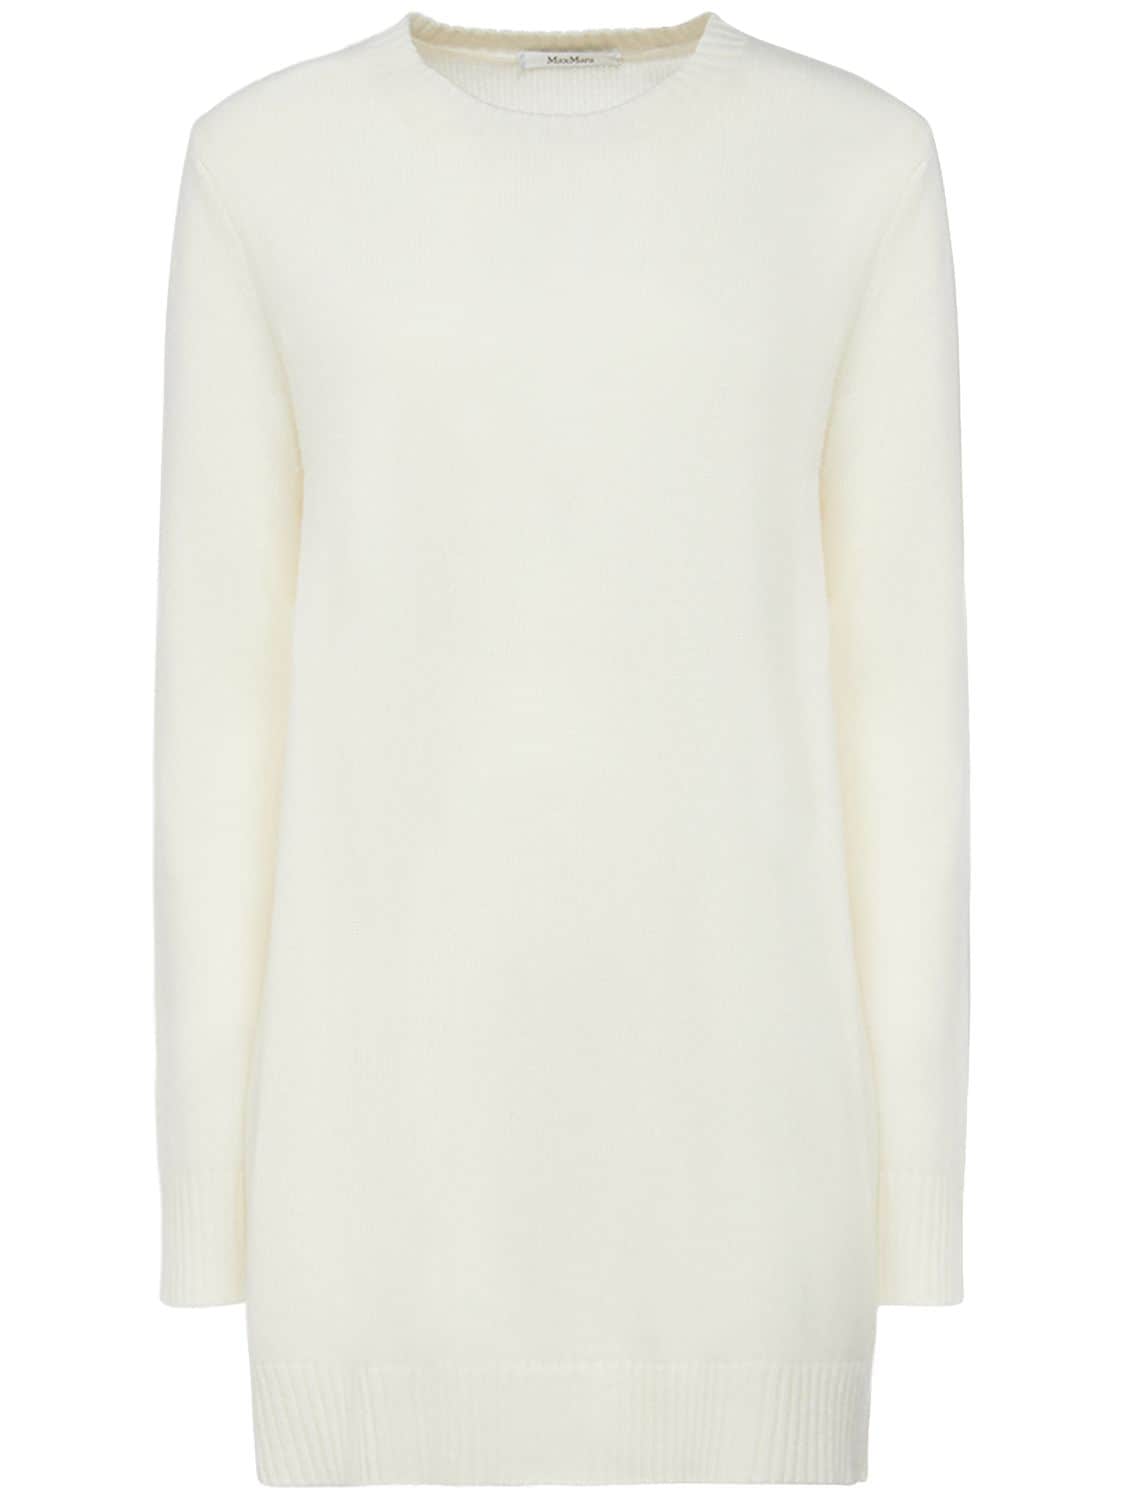 Max Mara Selina Oversized Cashmere Knit Sweater In White